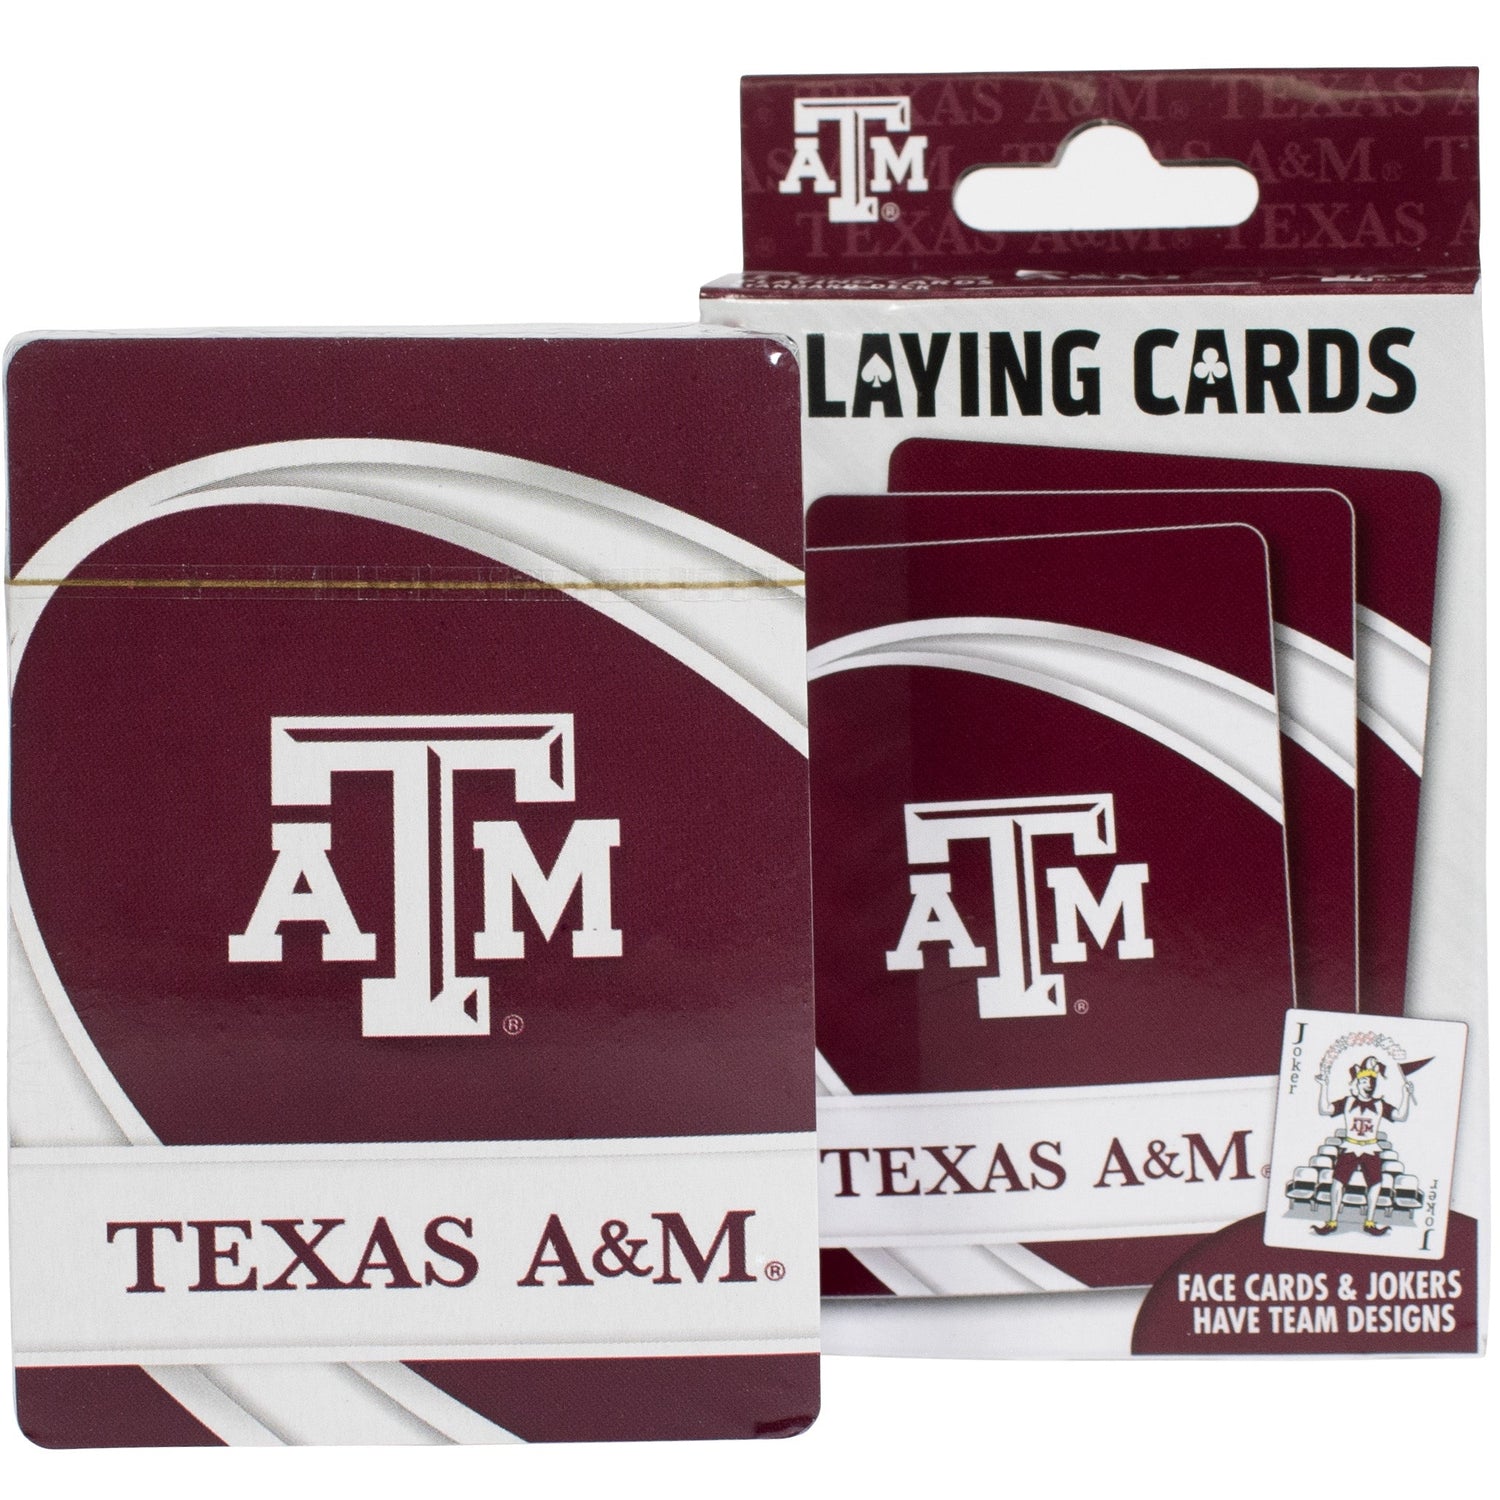 Cards Season Ends at Texas A&M